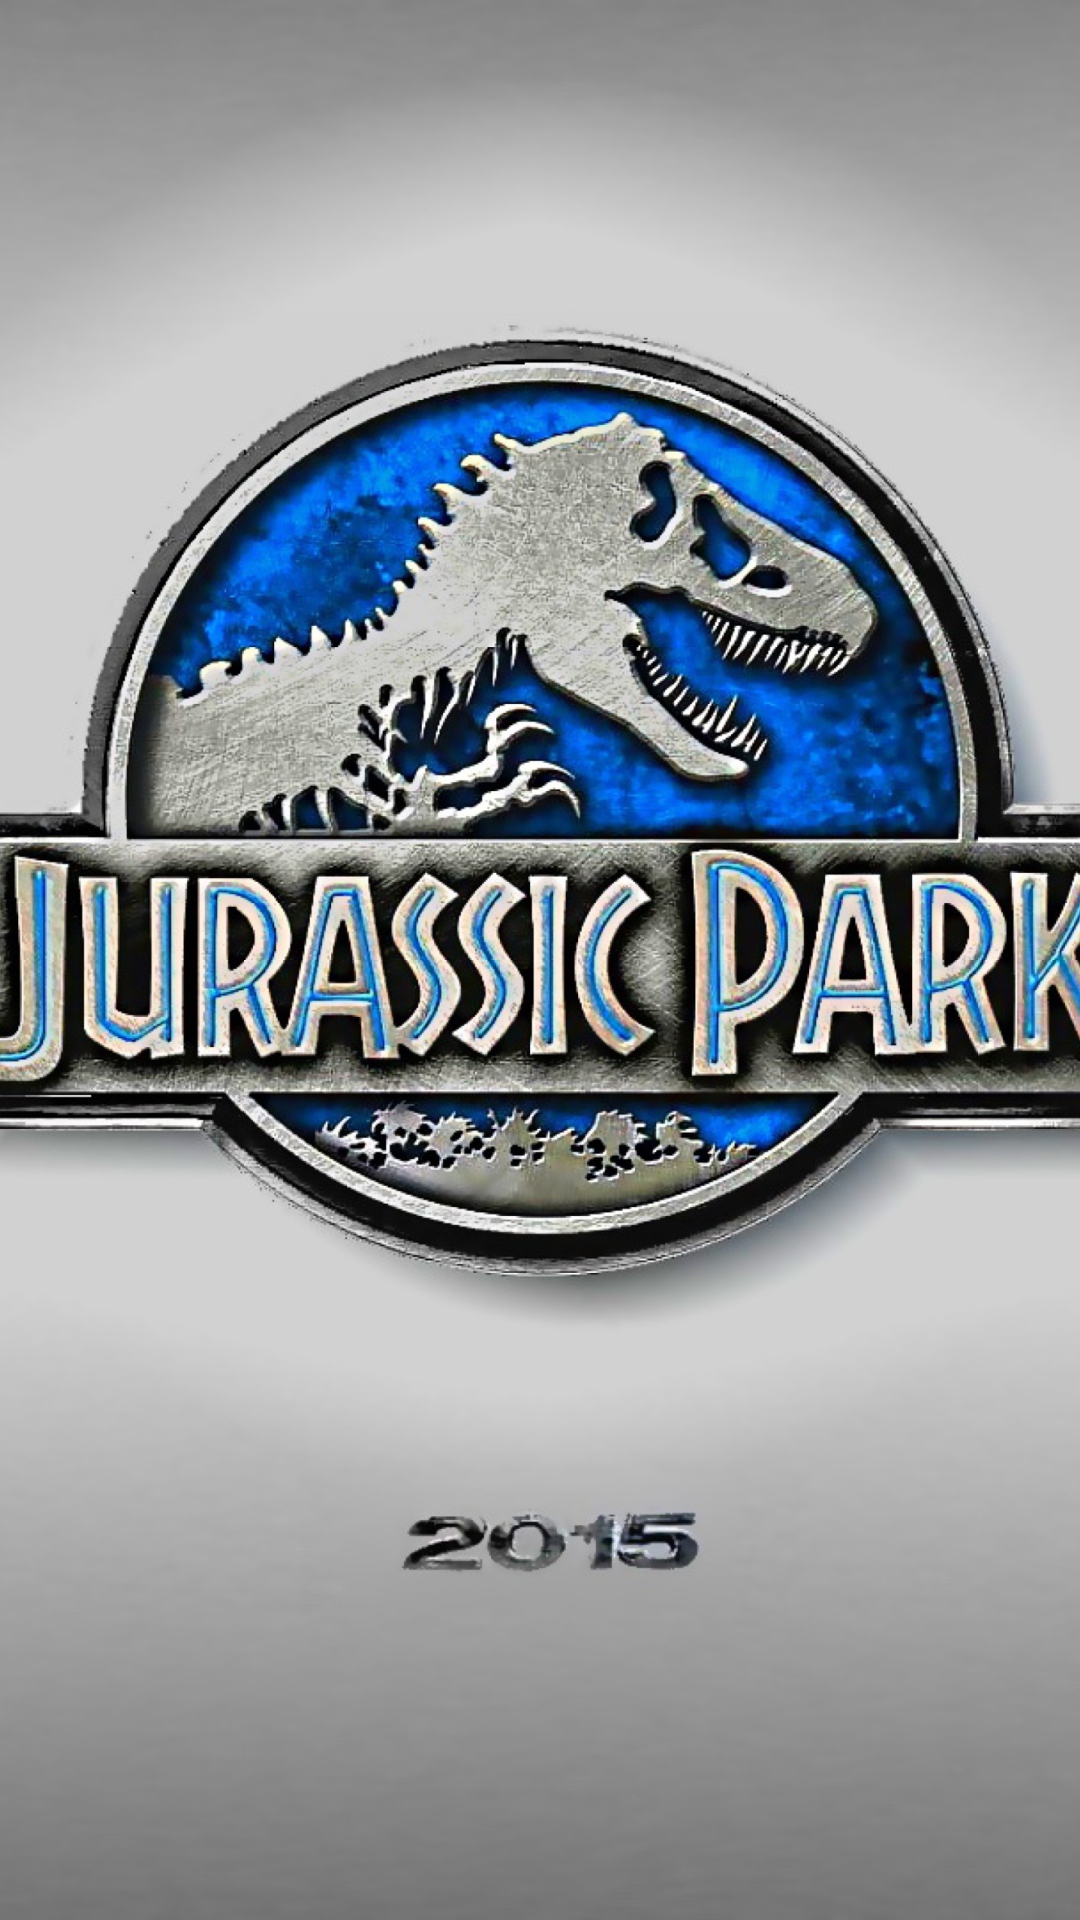 Jurassic Park 2015 wallpaper 1080x1920